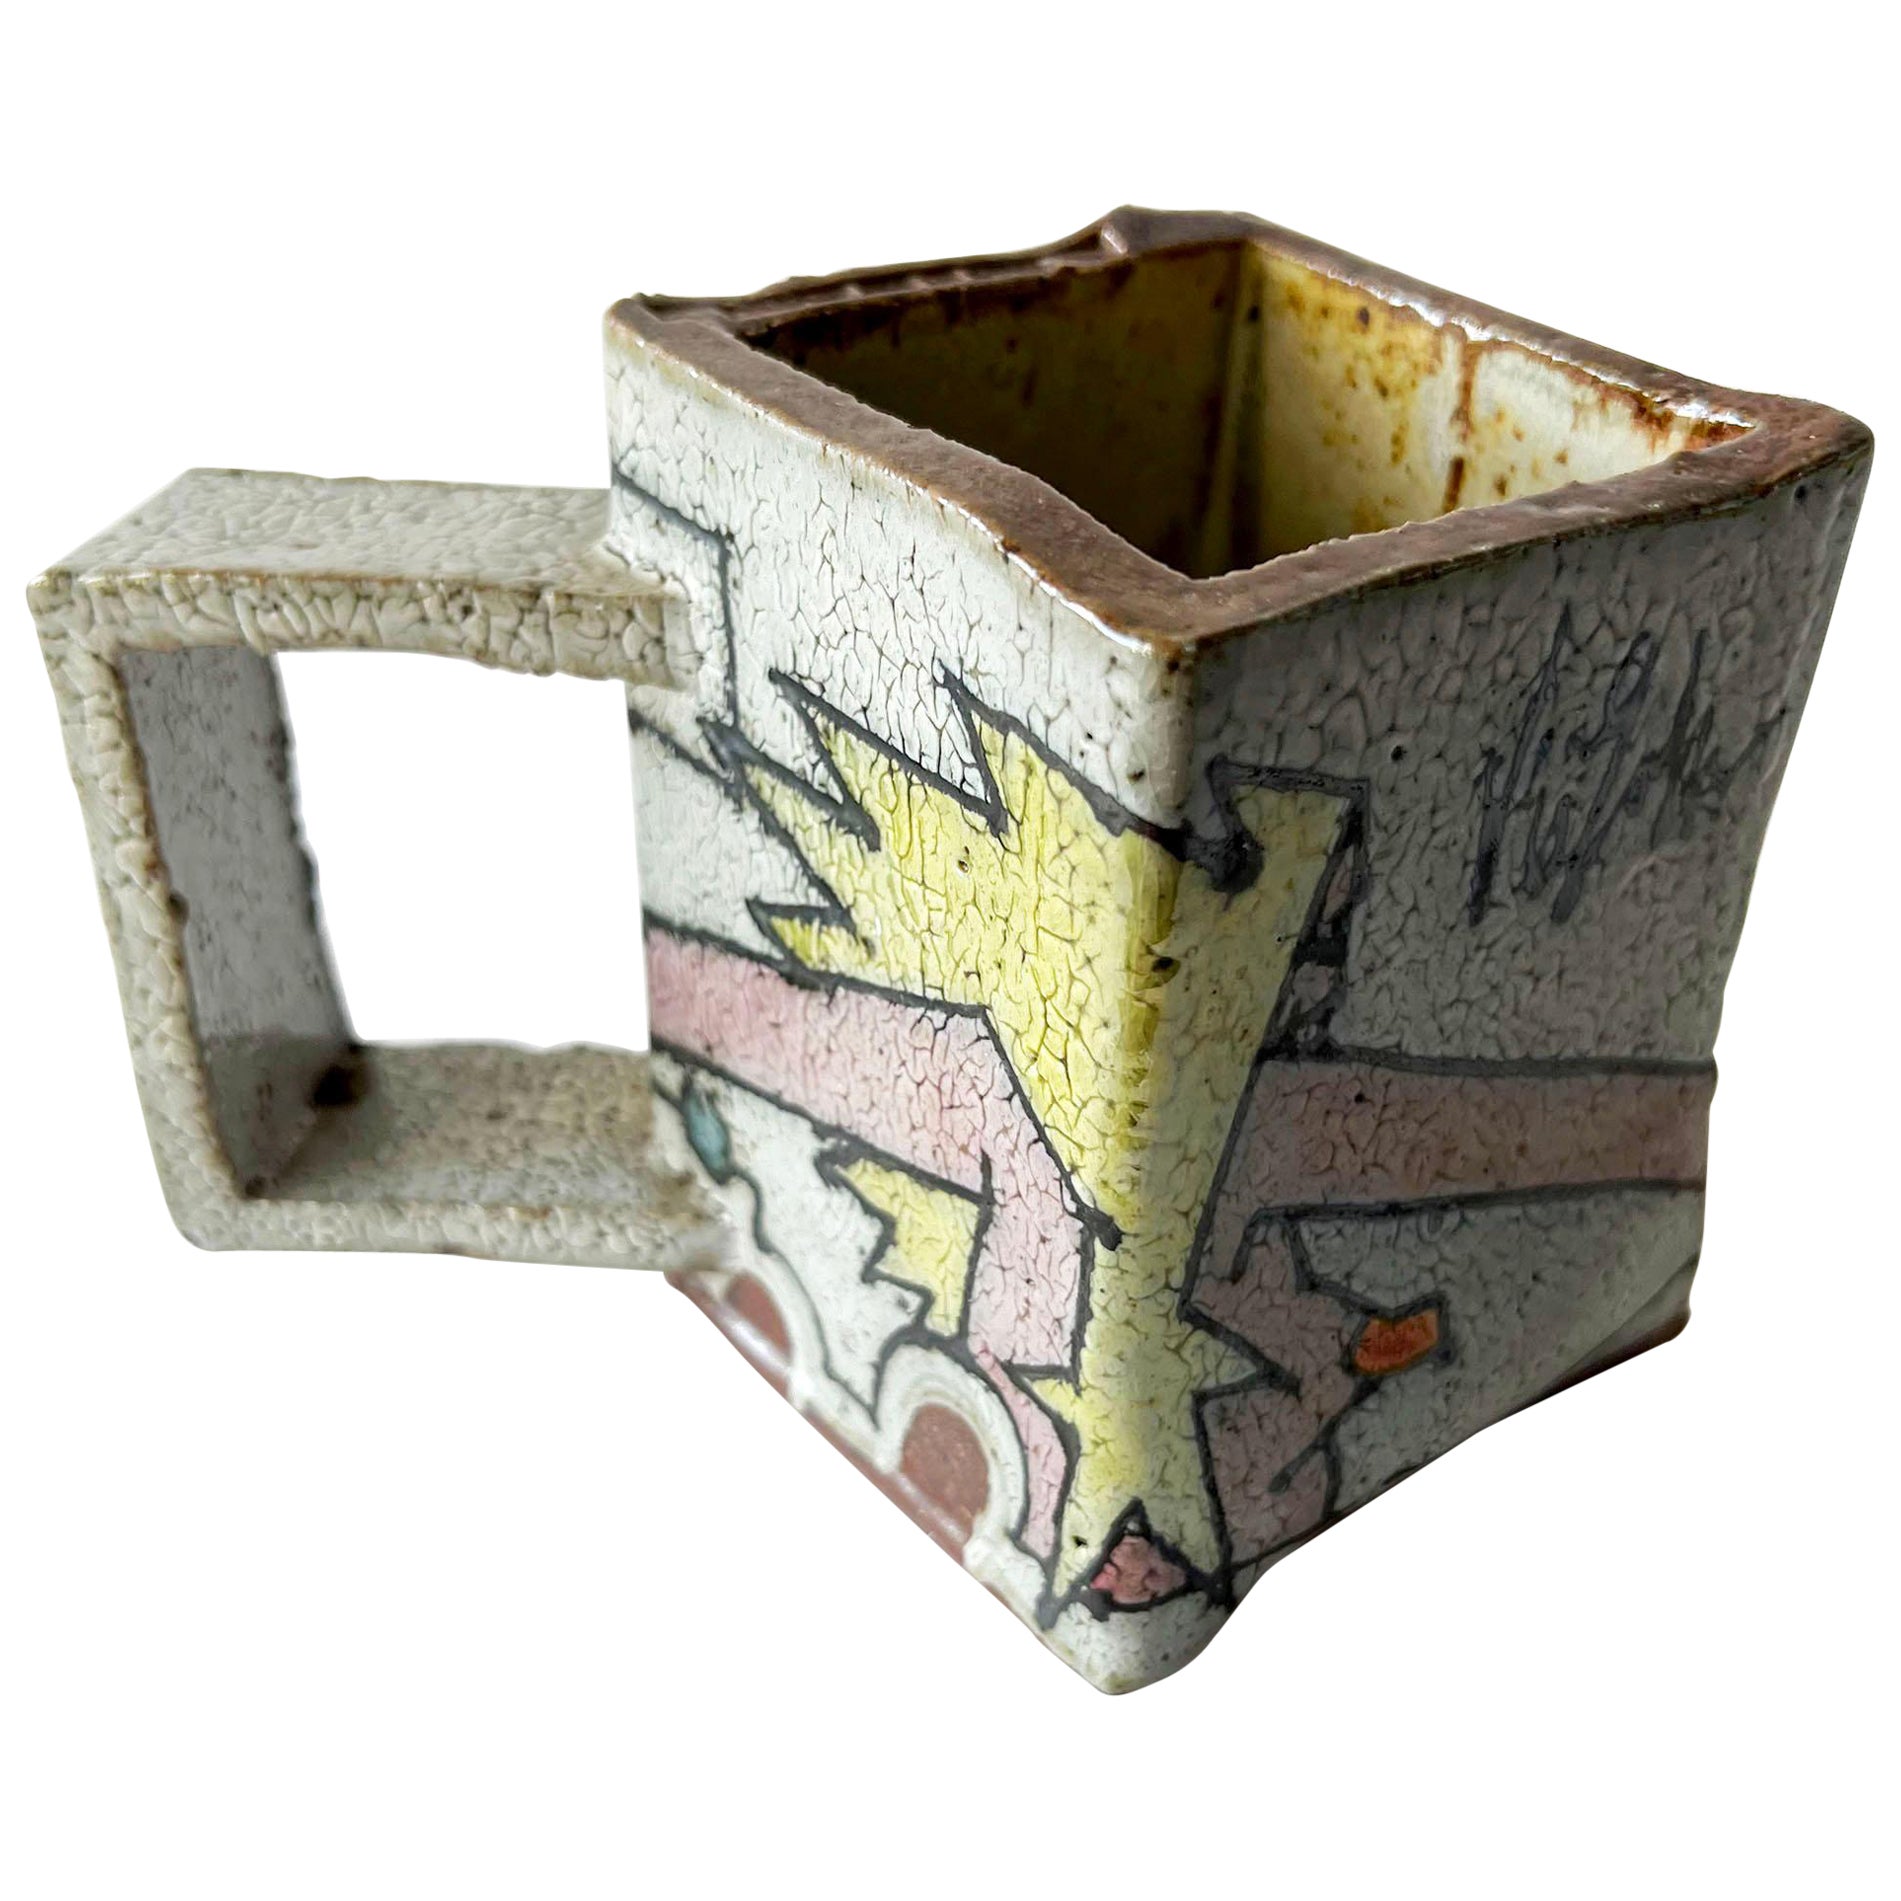 Rimas VisGirda California Studio Stoneware Funk Pottery Cup Mug For Sale